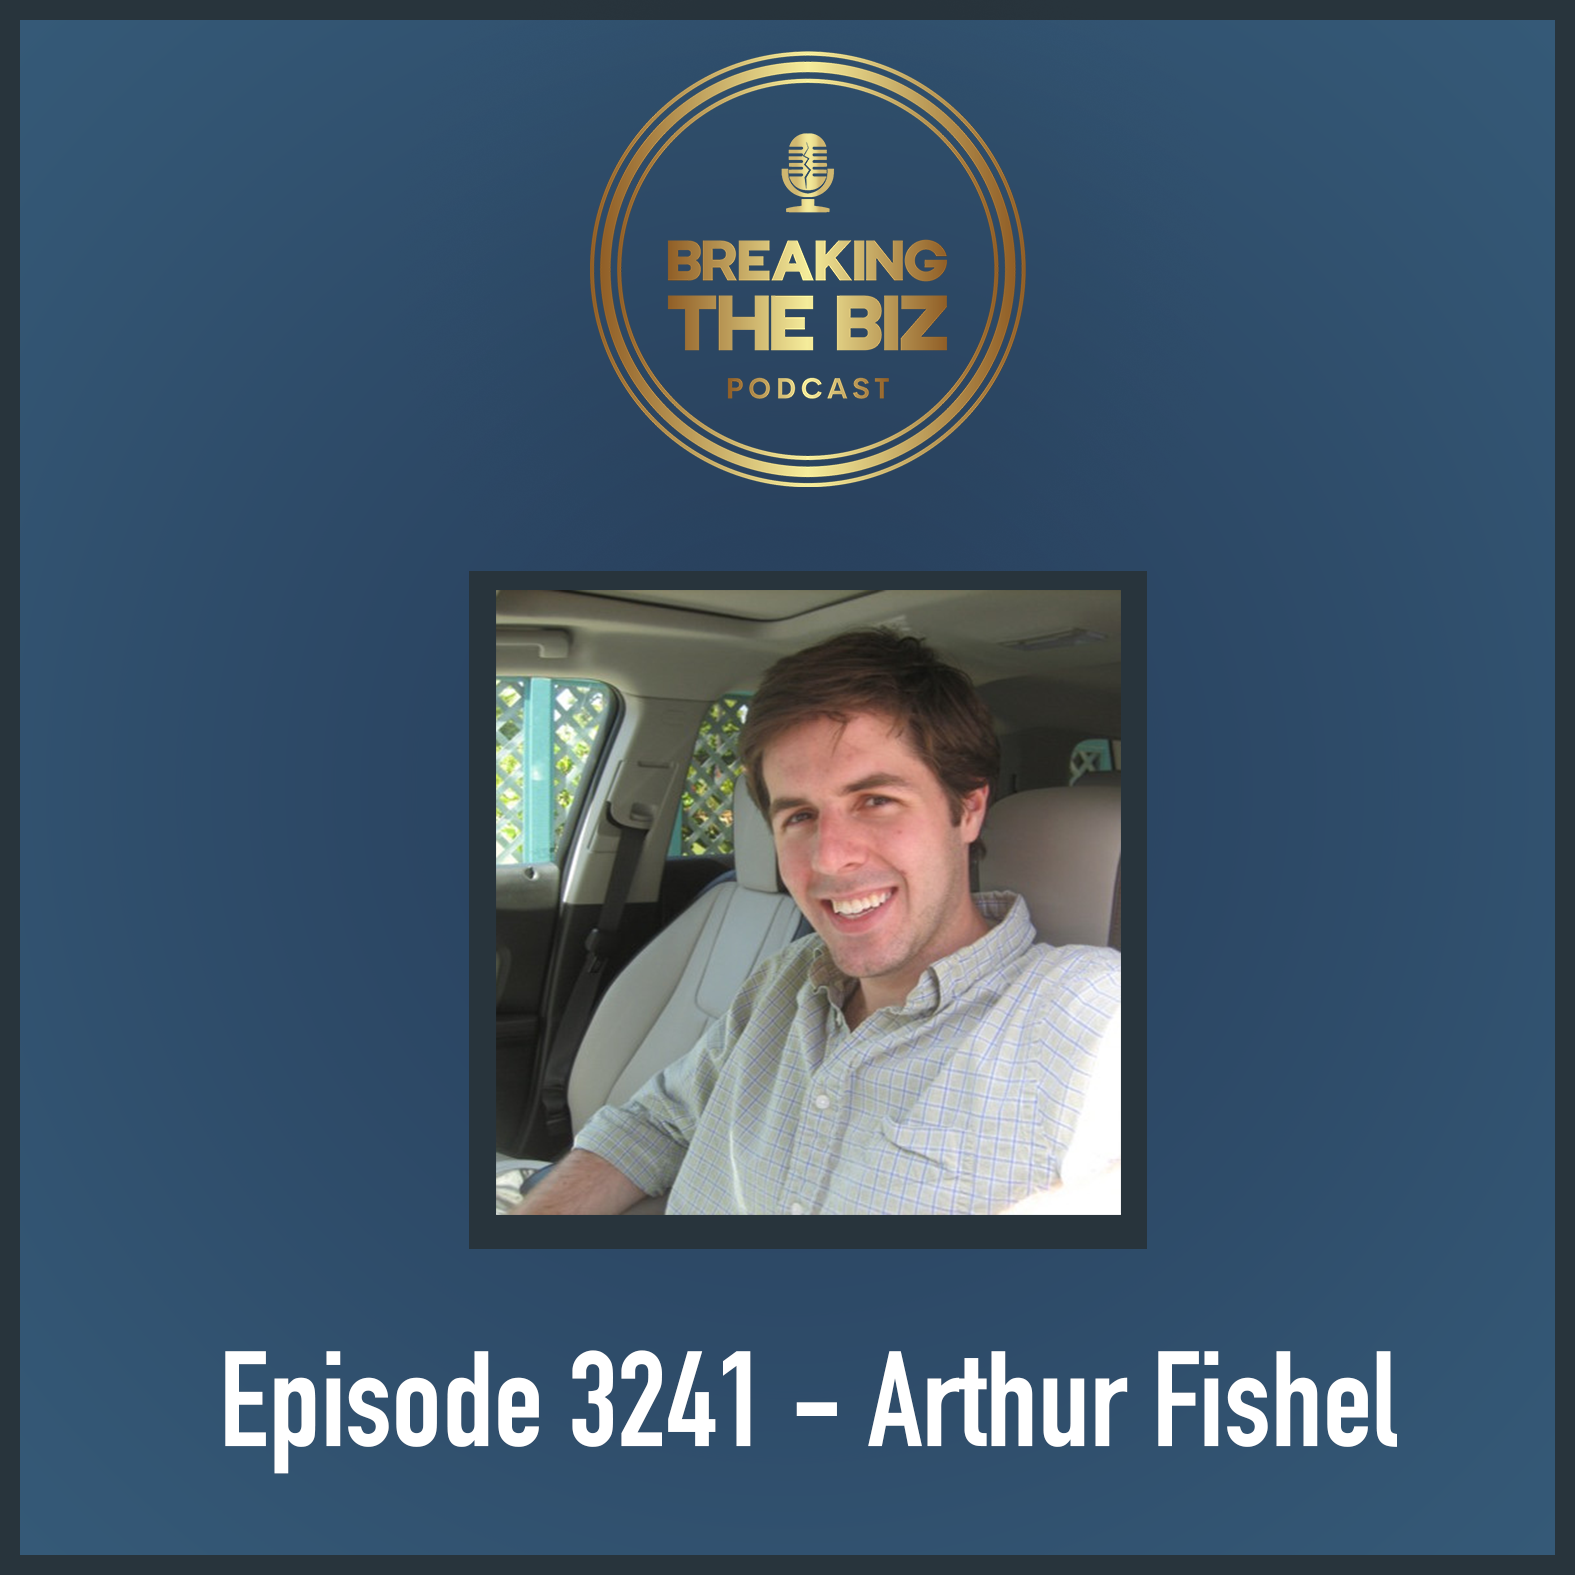 Episode 3241 - Arthur Fishel